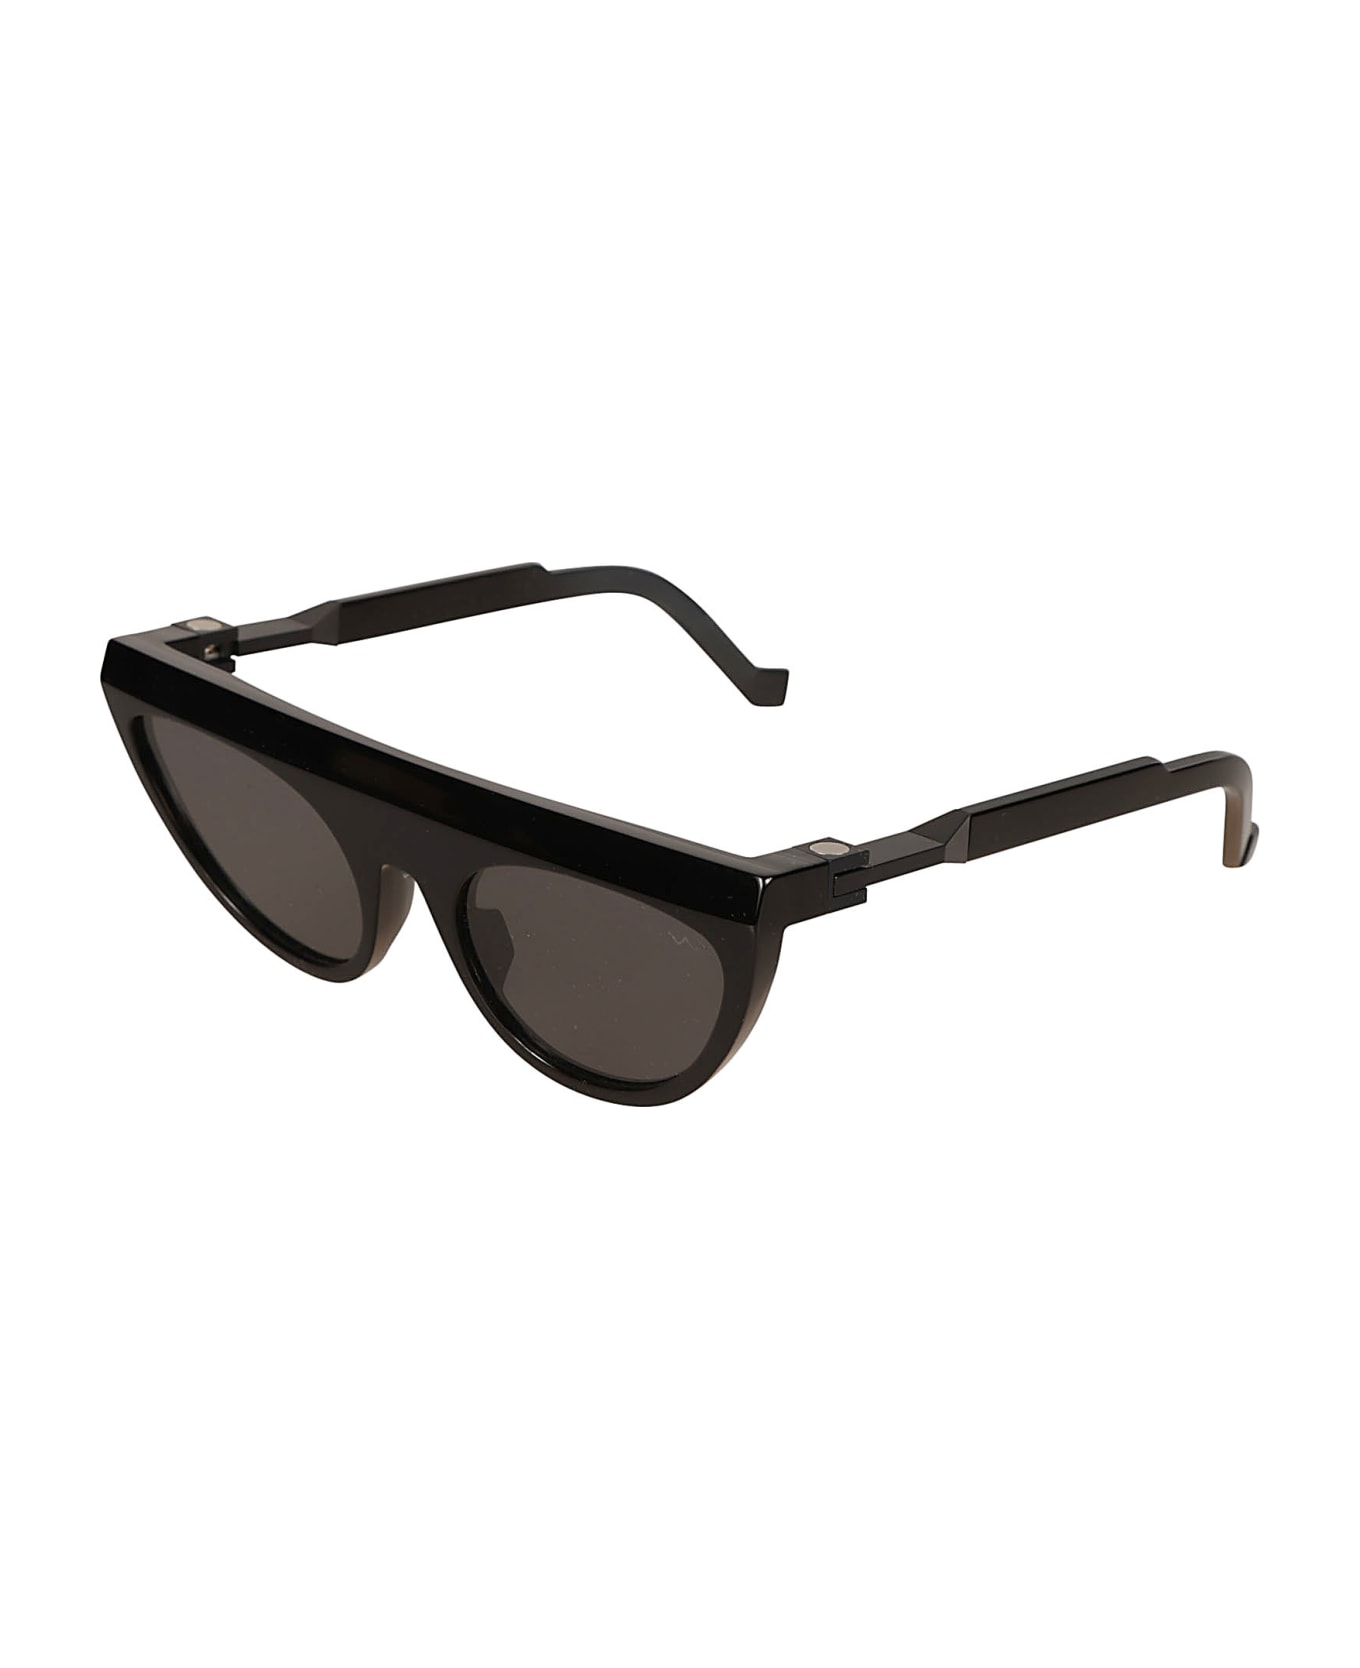 VAVA Cat-eye Sunglasses Sunglasses - Black